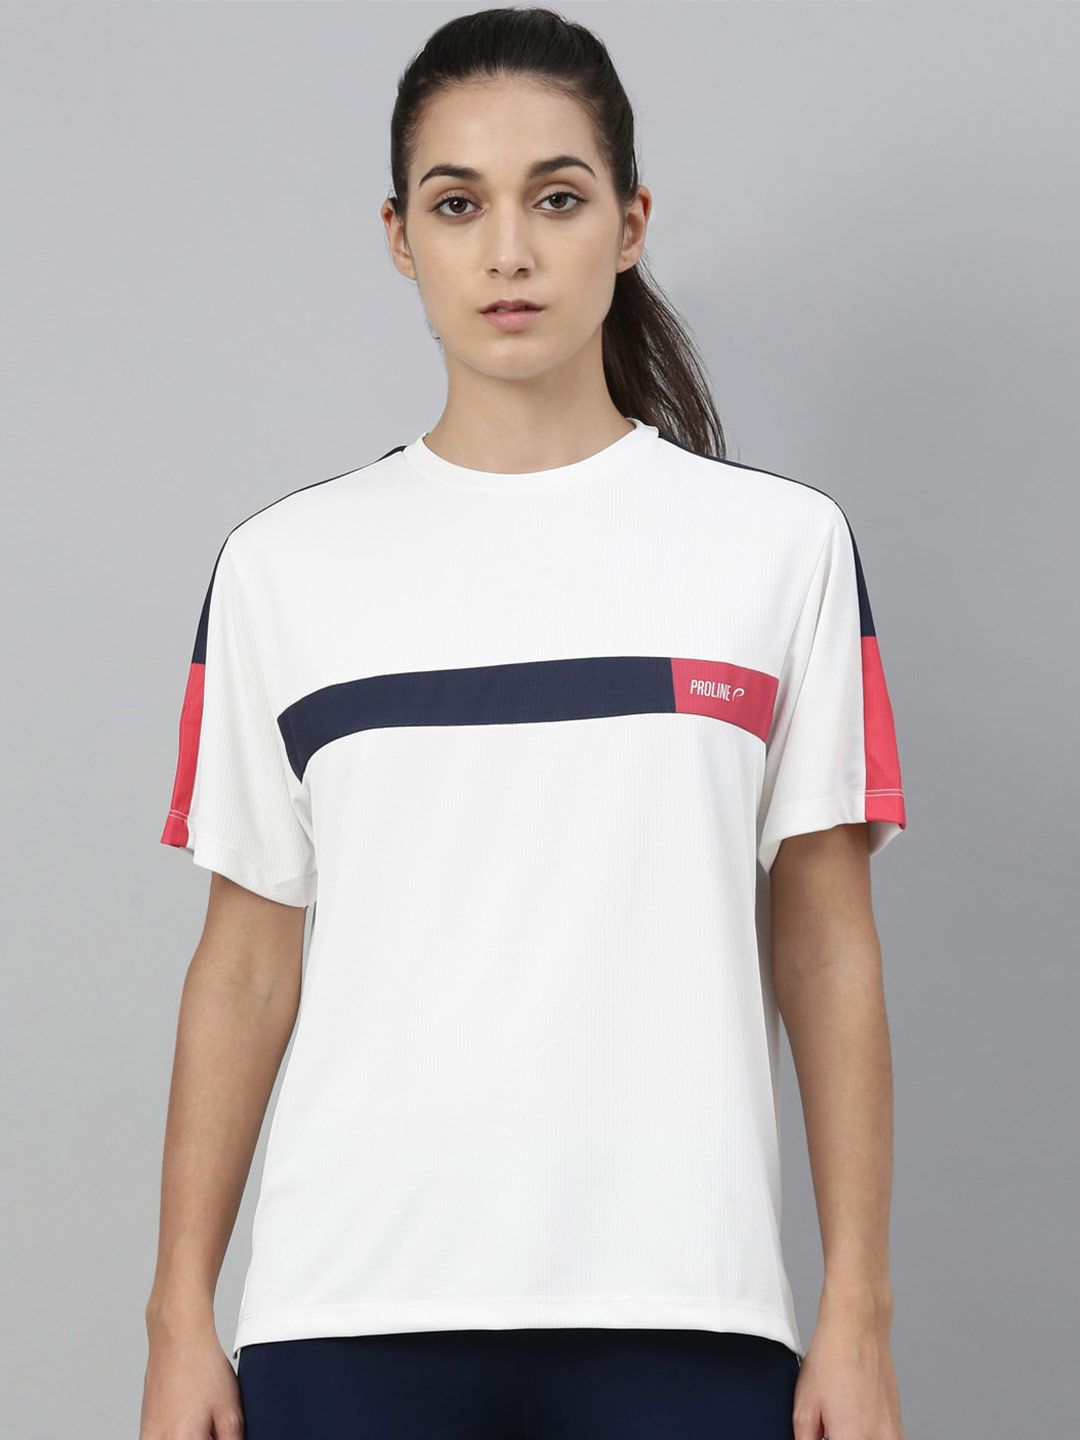 Proline Women Off White & Blue Colourblocked T-shirt Price in India